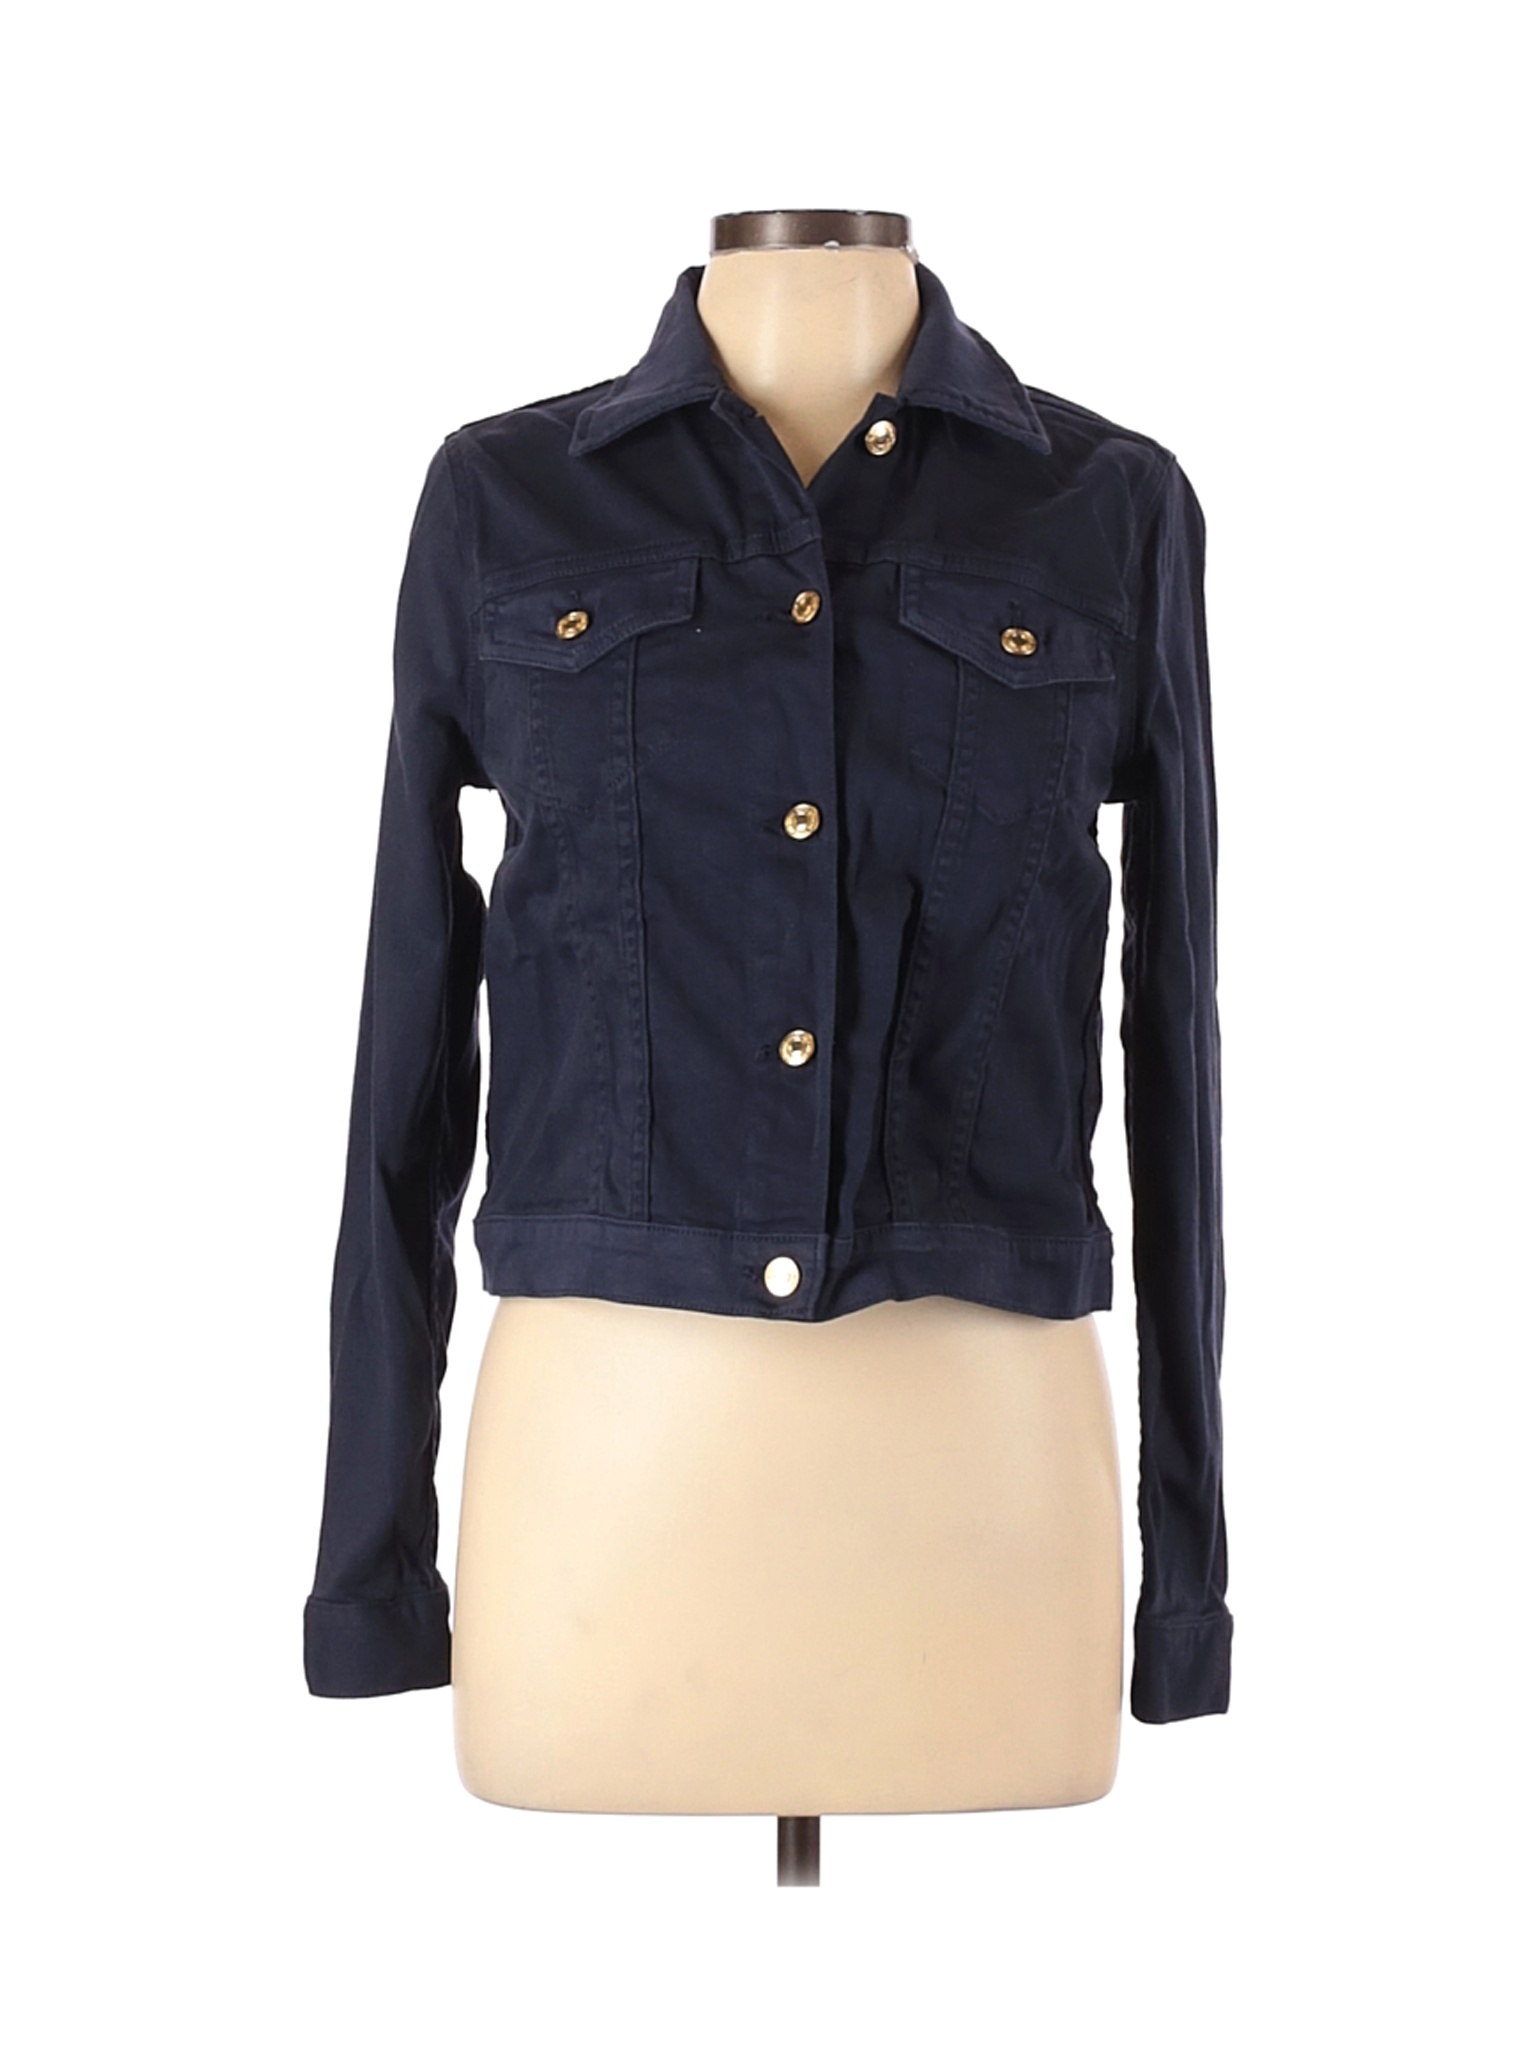 NWT MICHAEL Michael Kors Women Blue Denim Jacket M | eBay